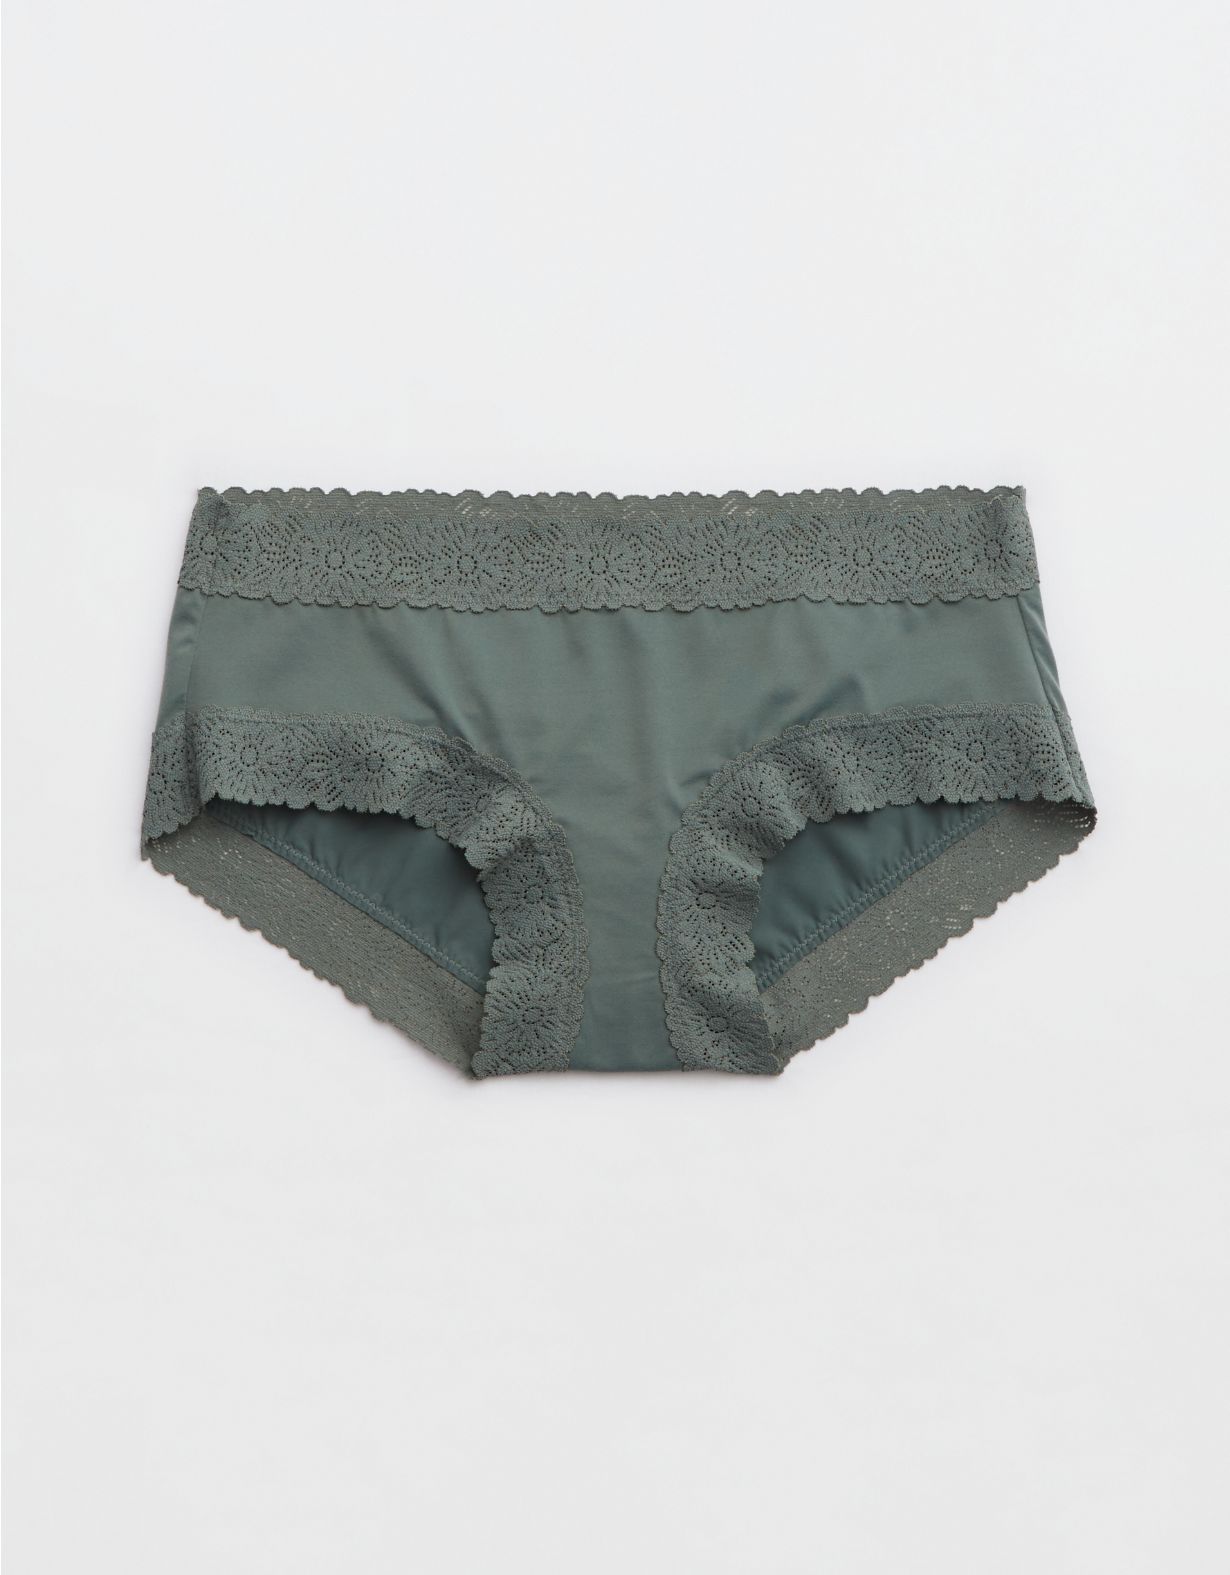 Sunnie Blossom Lace Boybrief Underwear